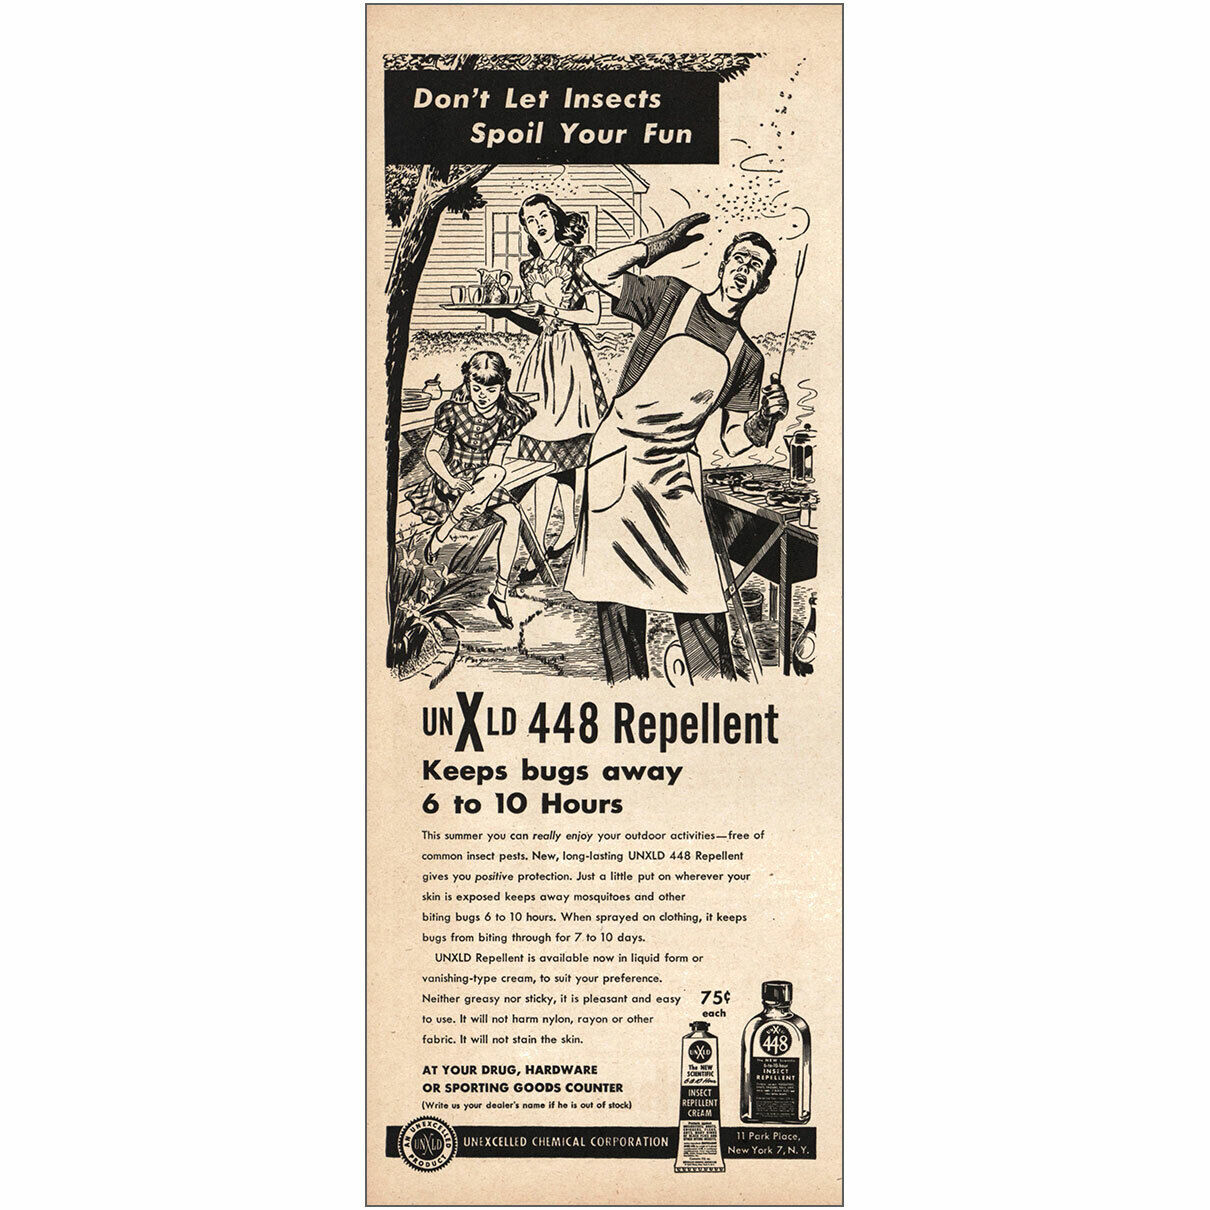 1947 Unxld 448 Repellent: Keeps Bugs Away Vintage Print Ad